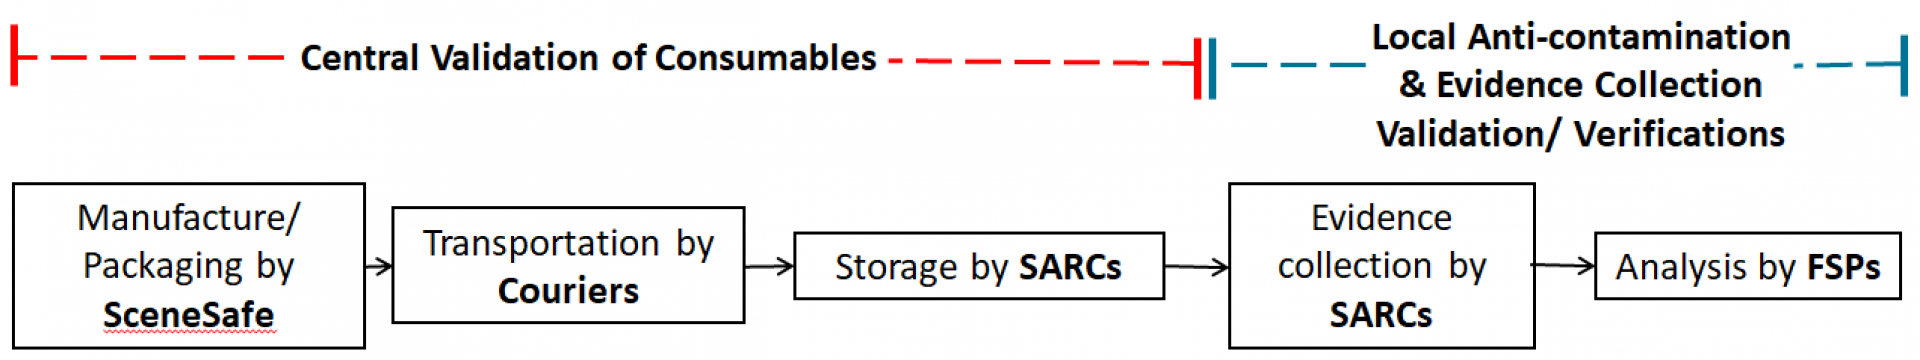 SARC validation process